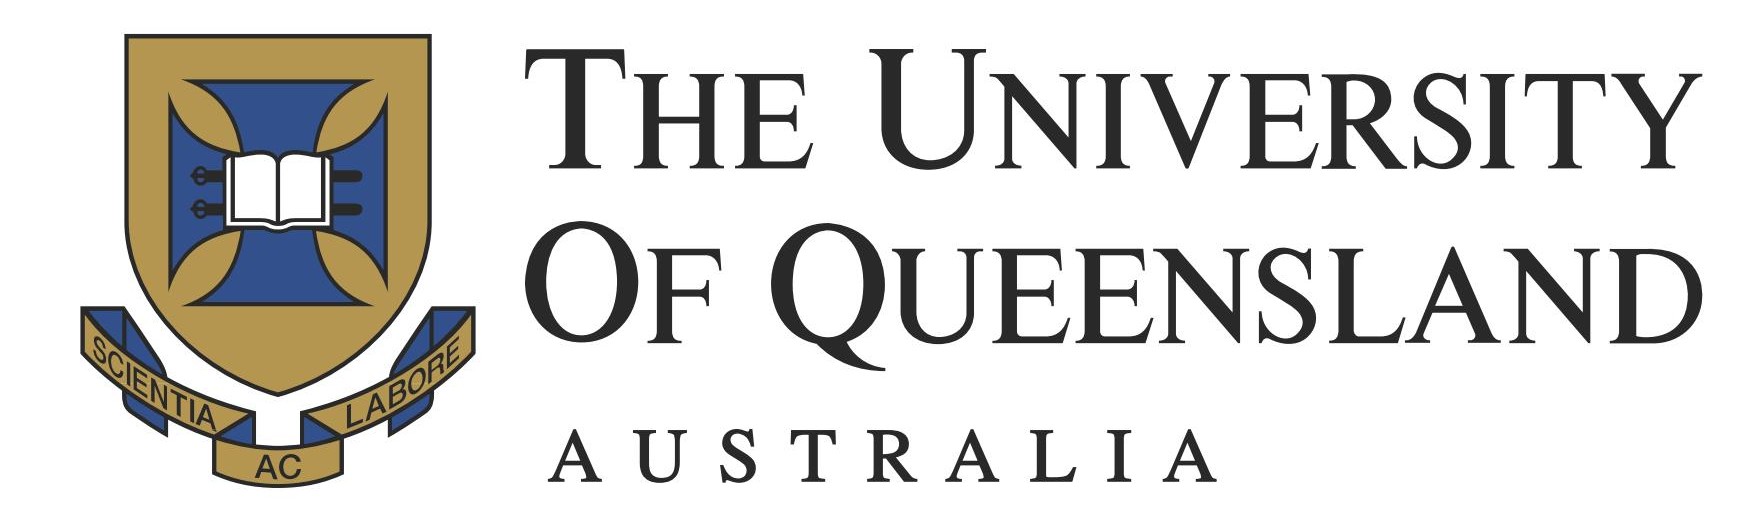 University of Queensland Logo photo - 1